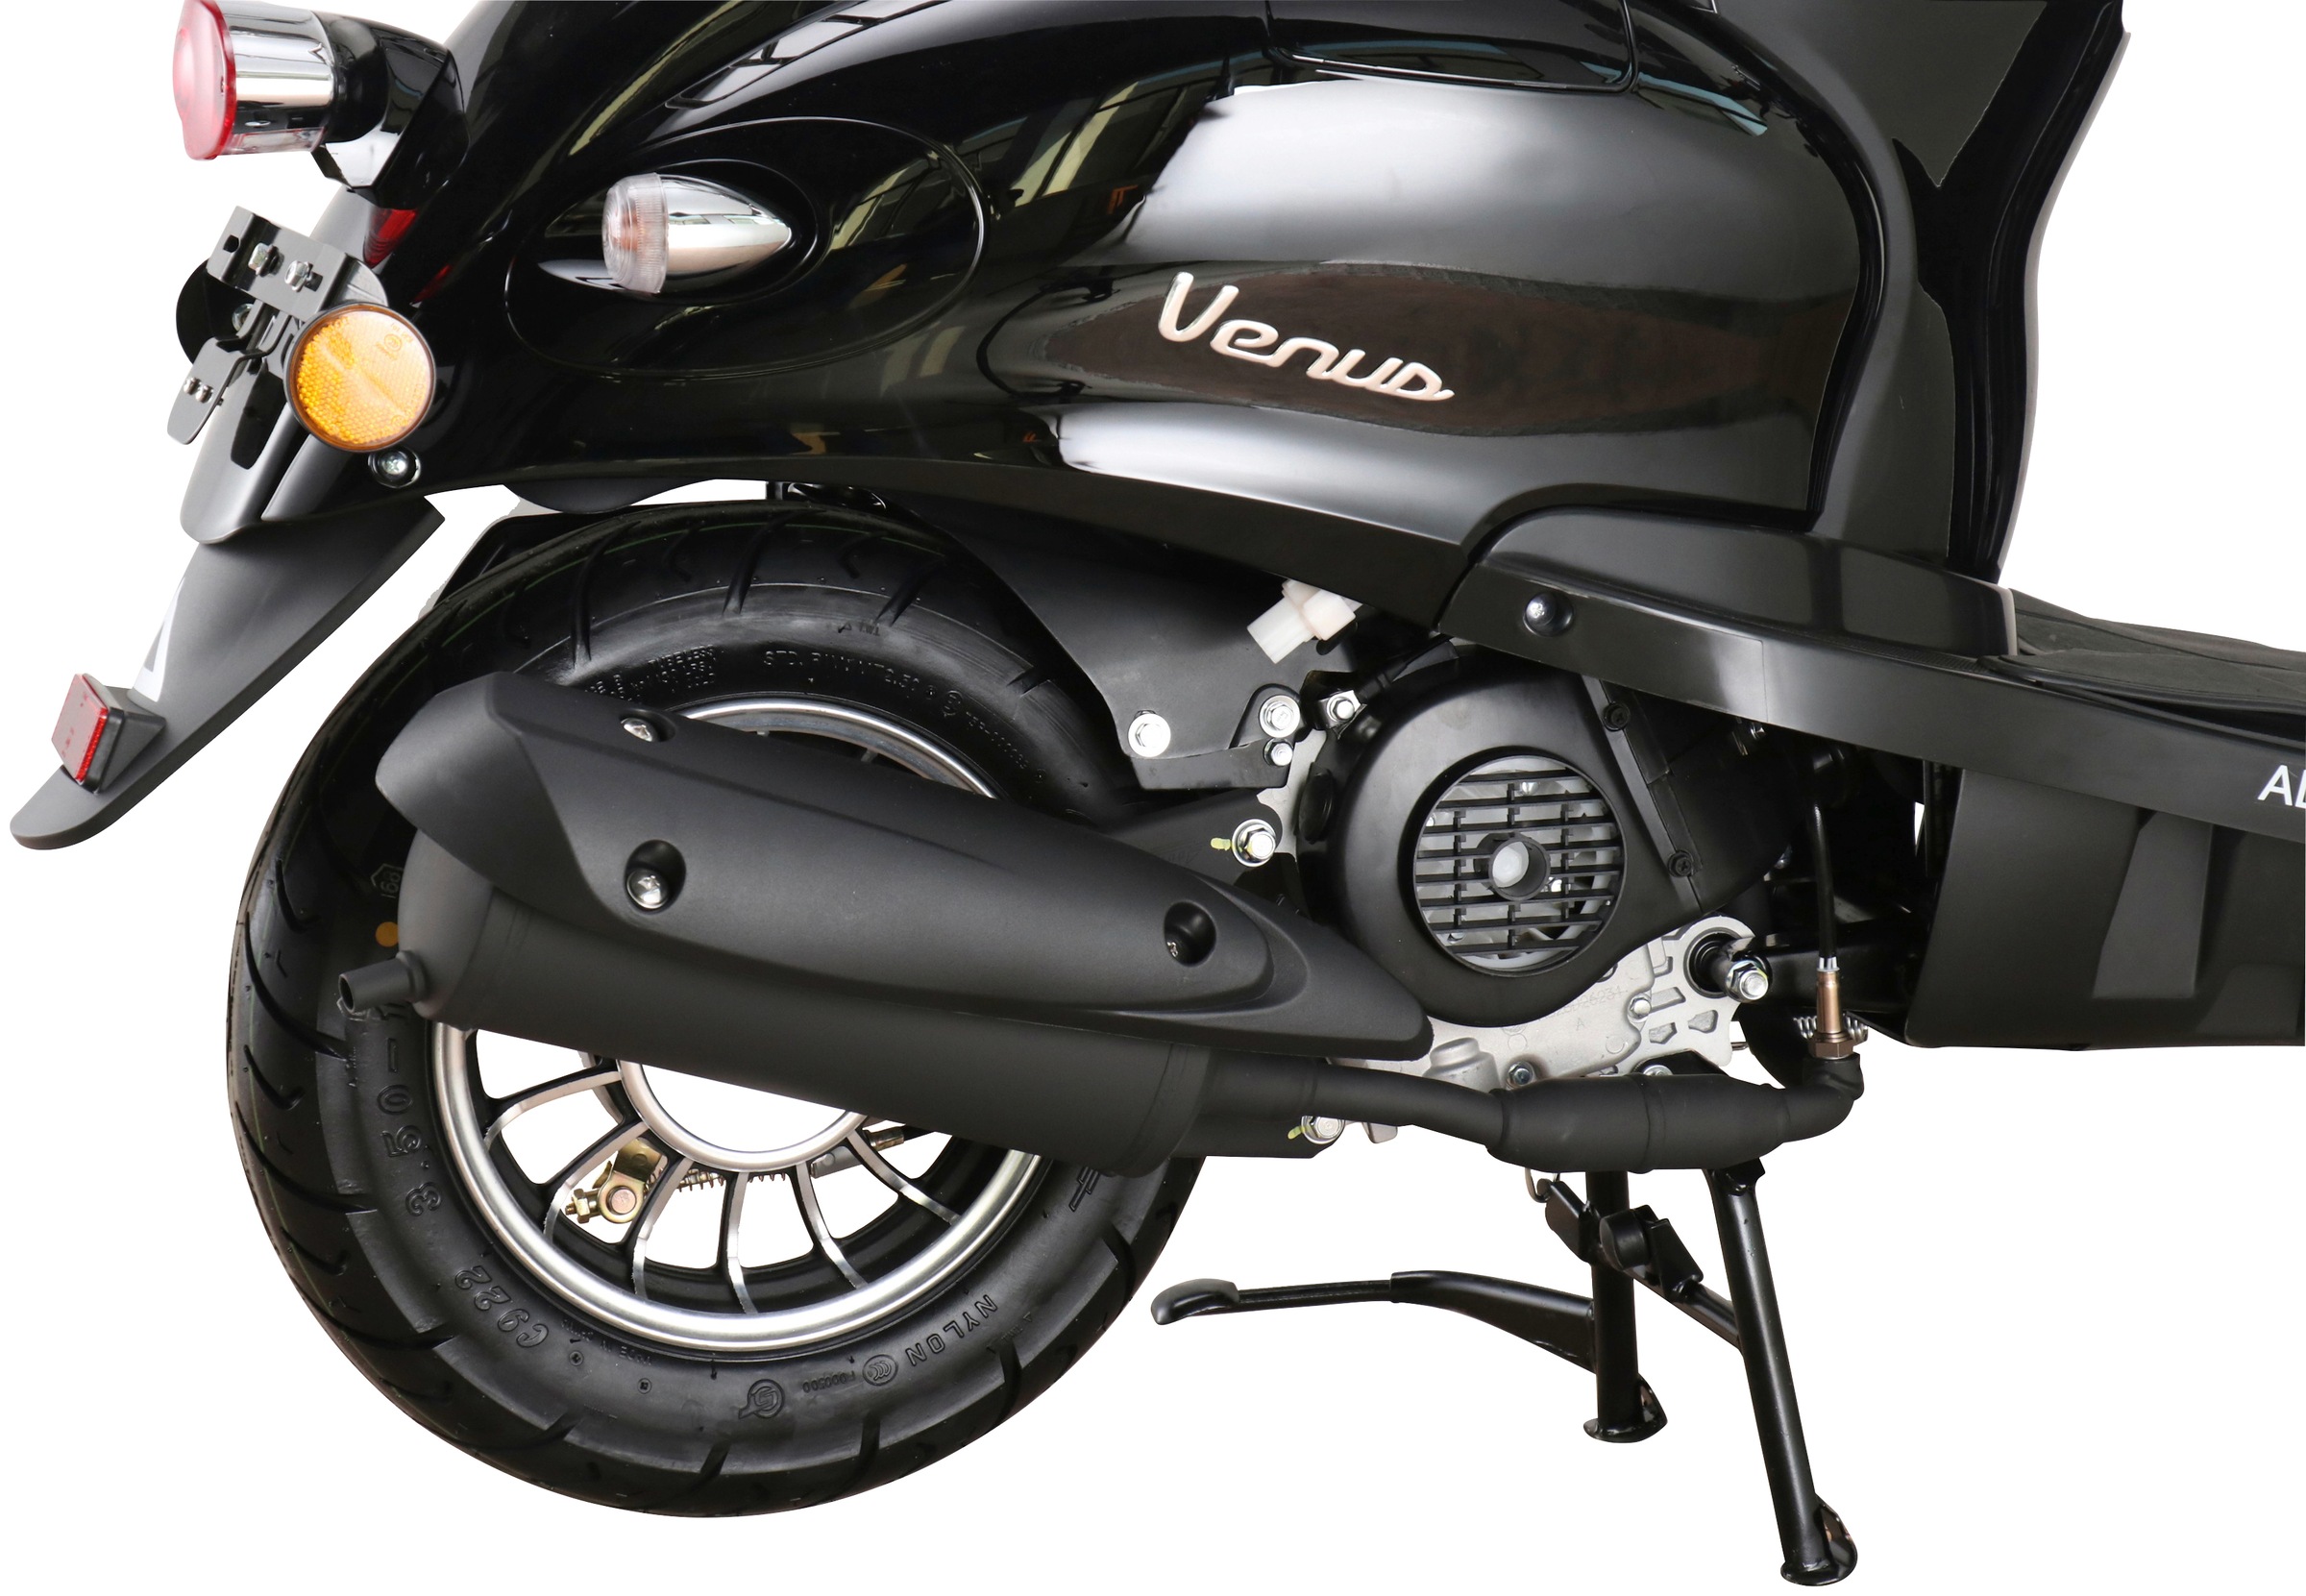 Alpha Motors Motorroller »Venus«, 50 cm³, 45 km/h, Euro 5, 2,99 PS jetzt im  %Sale